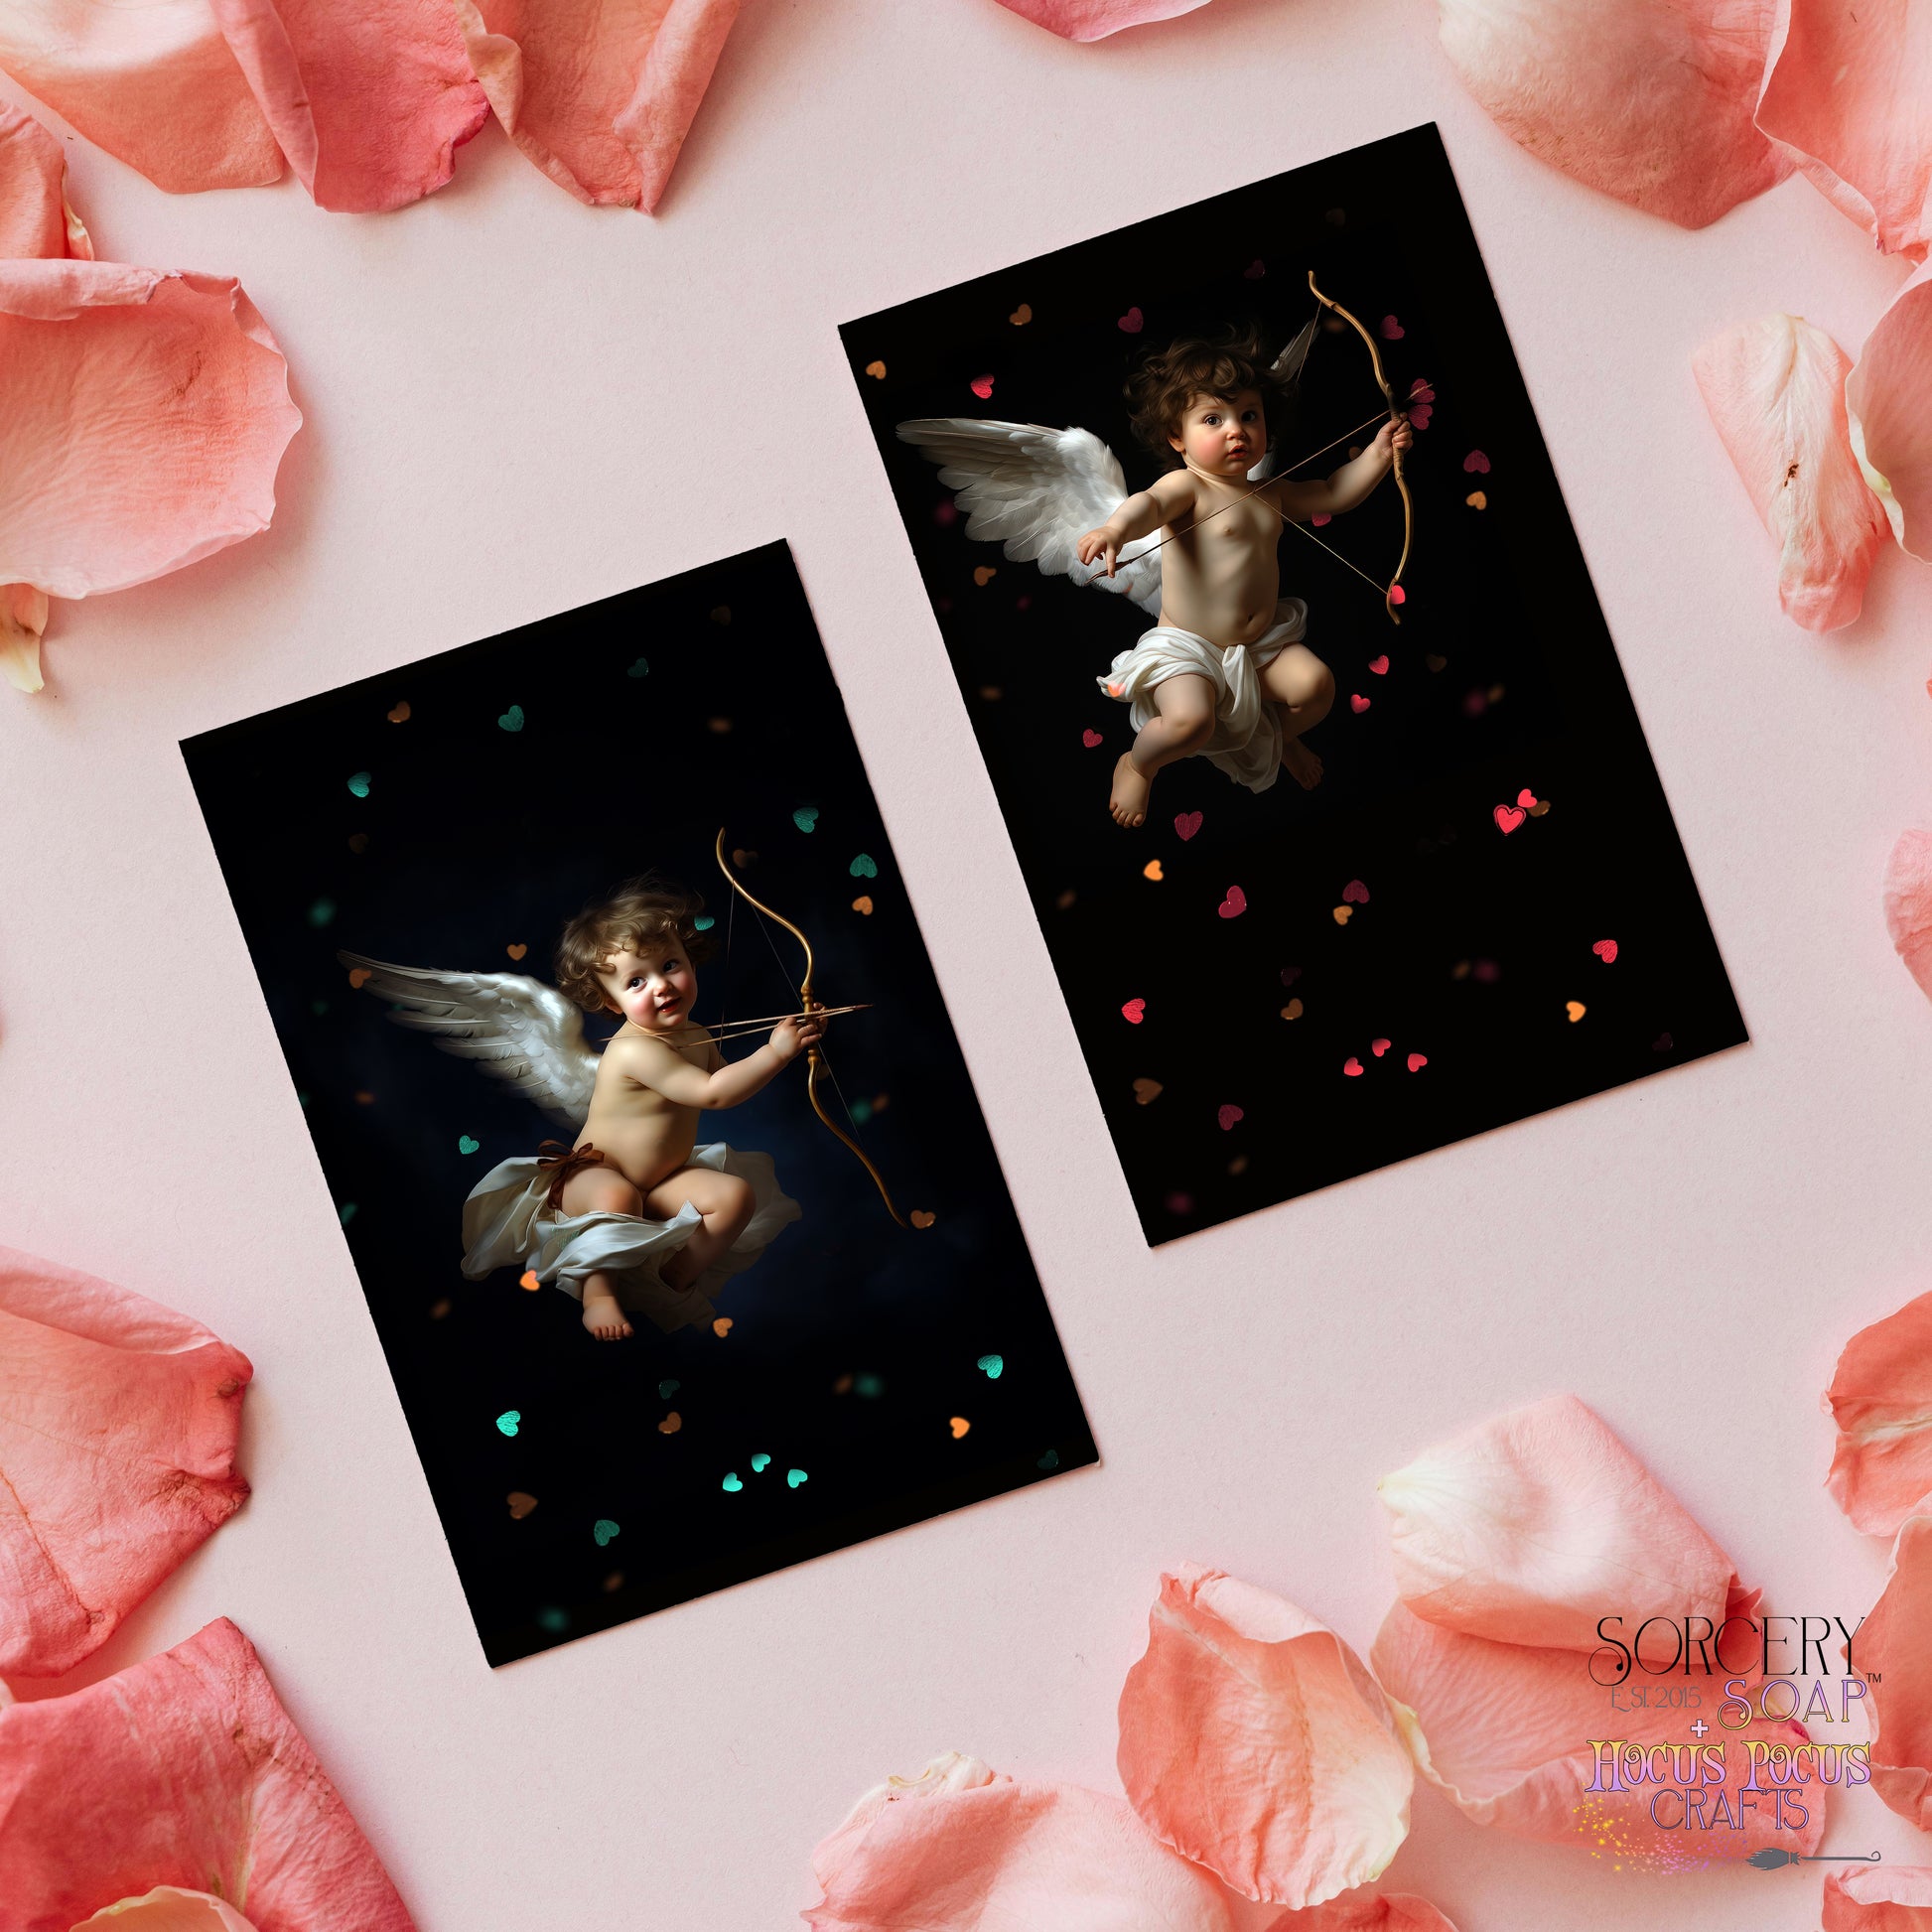 Valentine Cupid Greeting Card